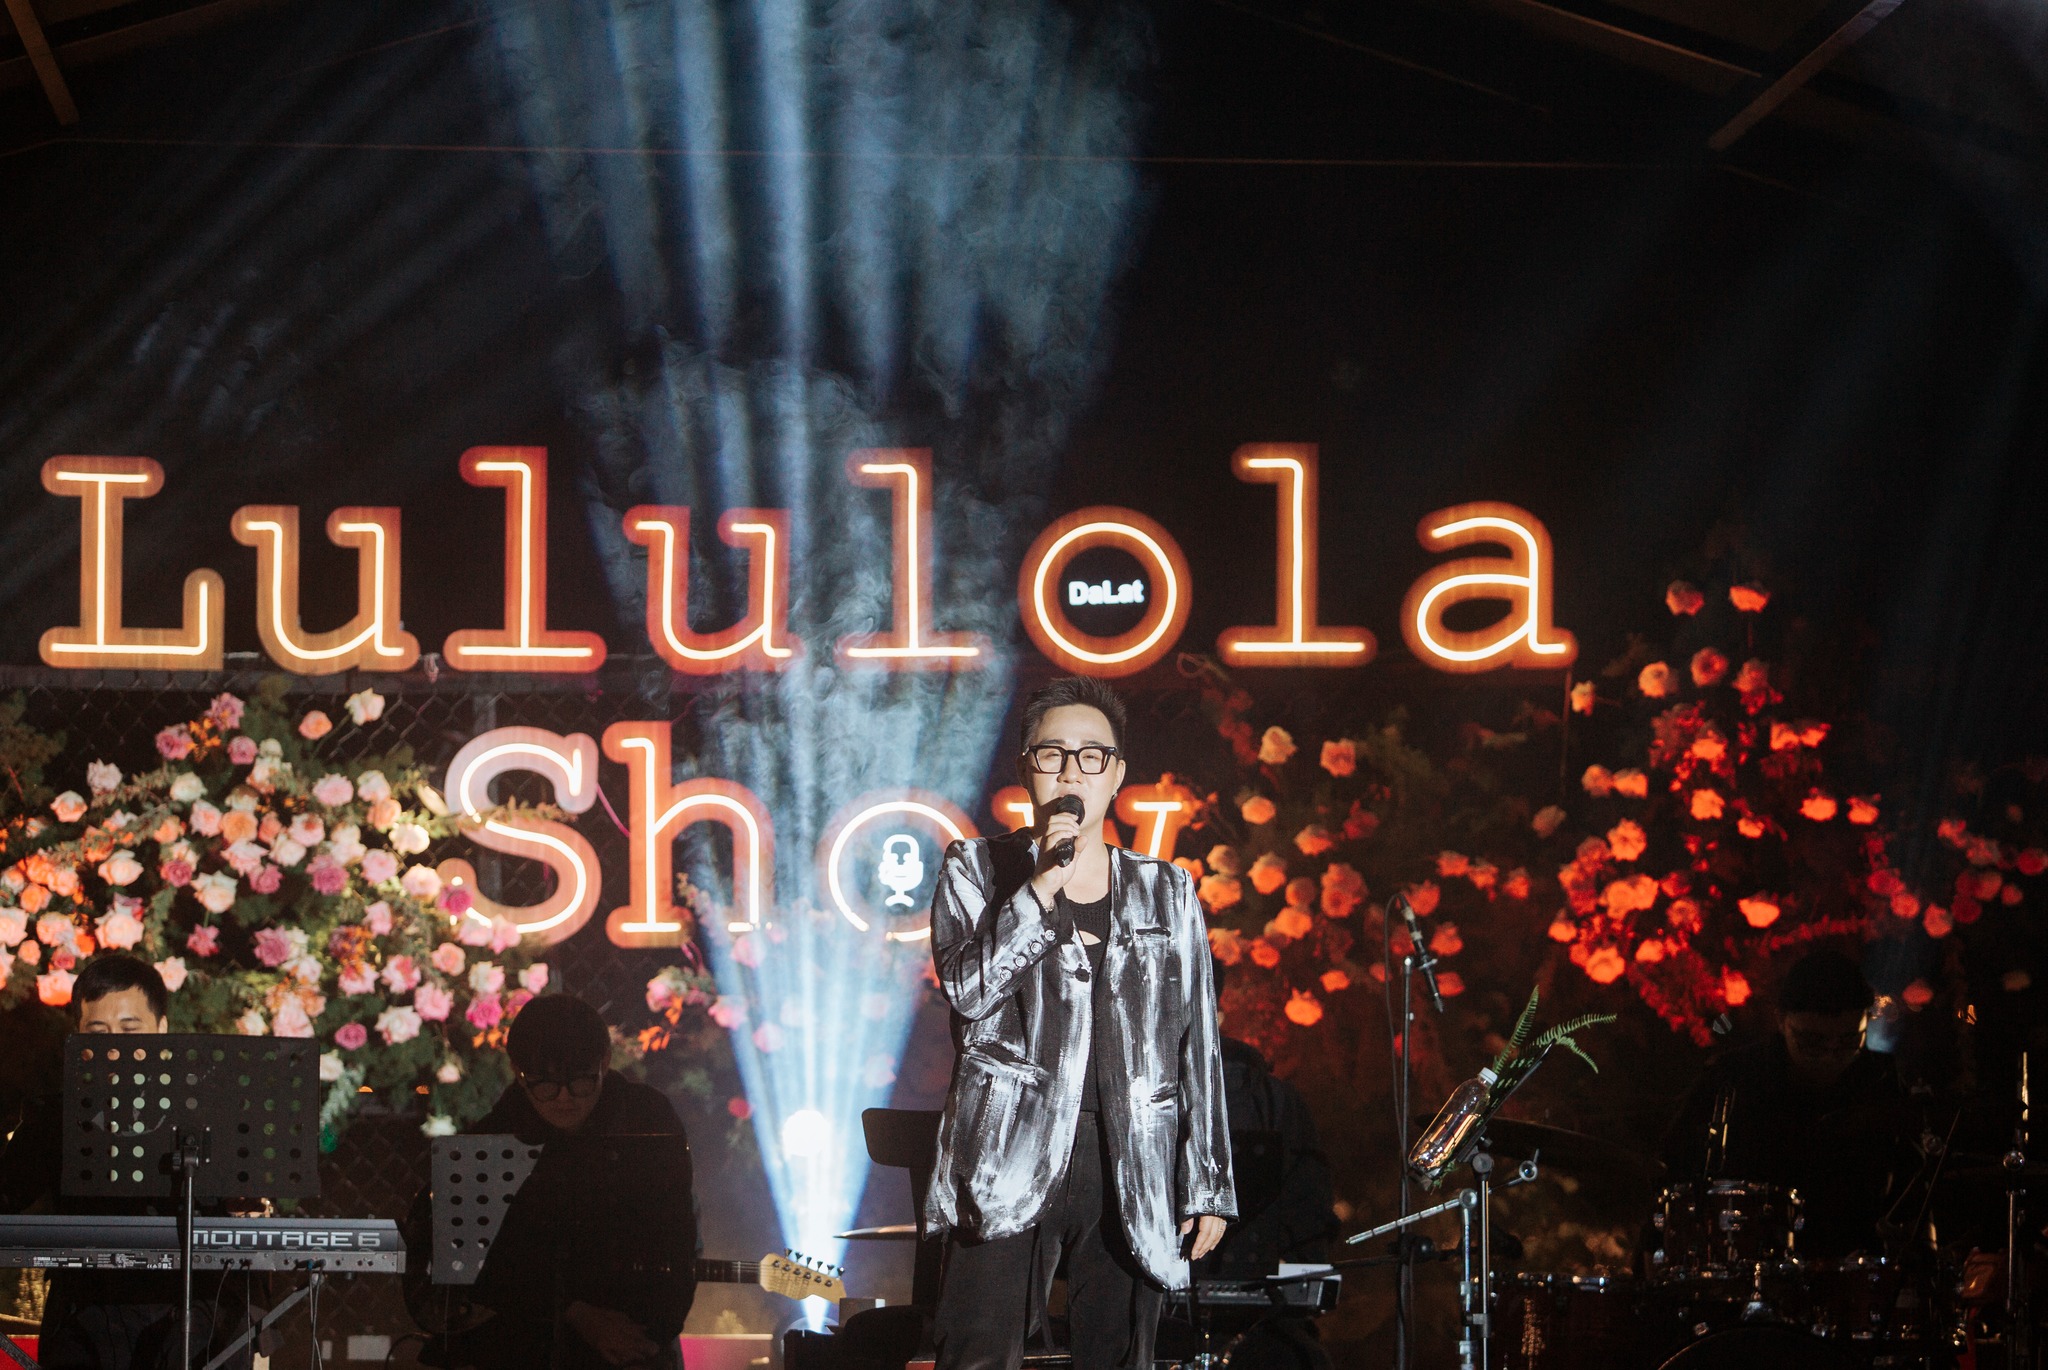 thông tin show trung quân luluola show